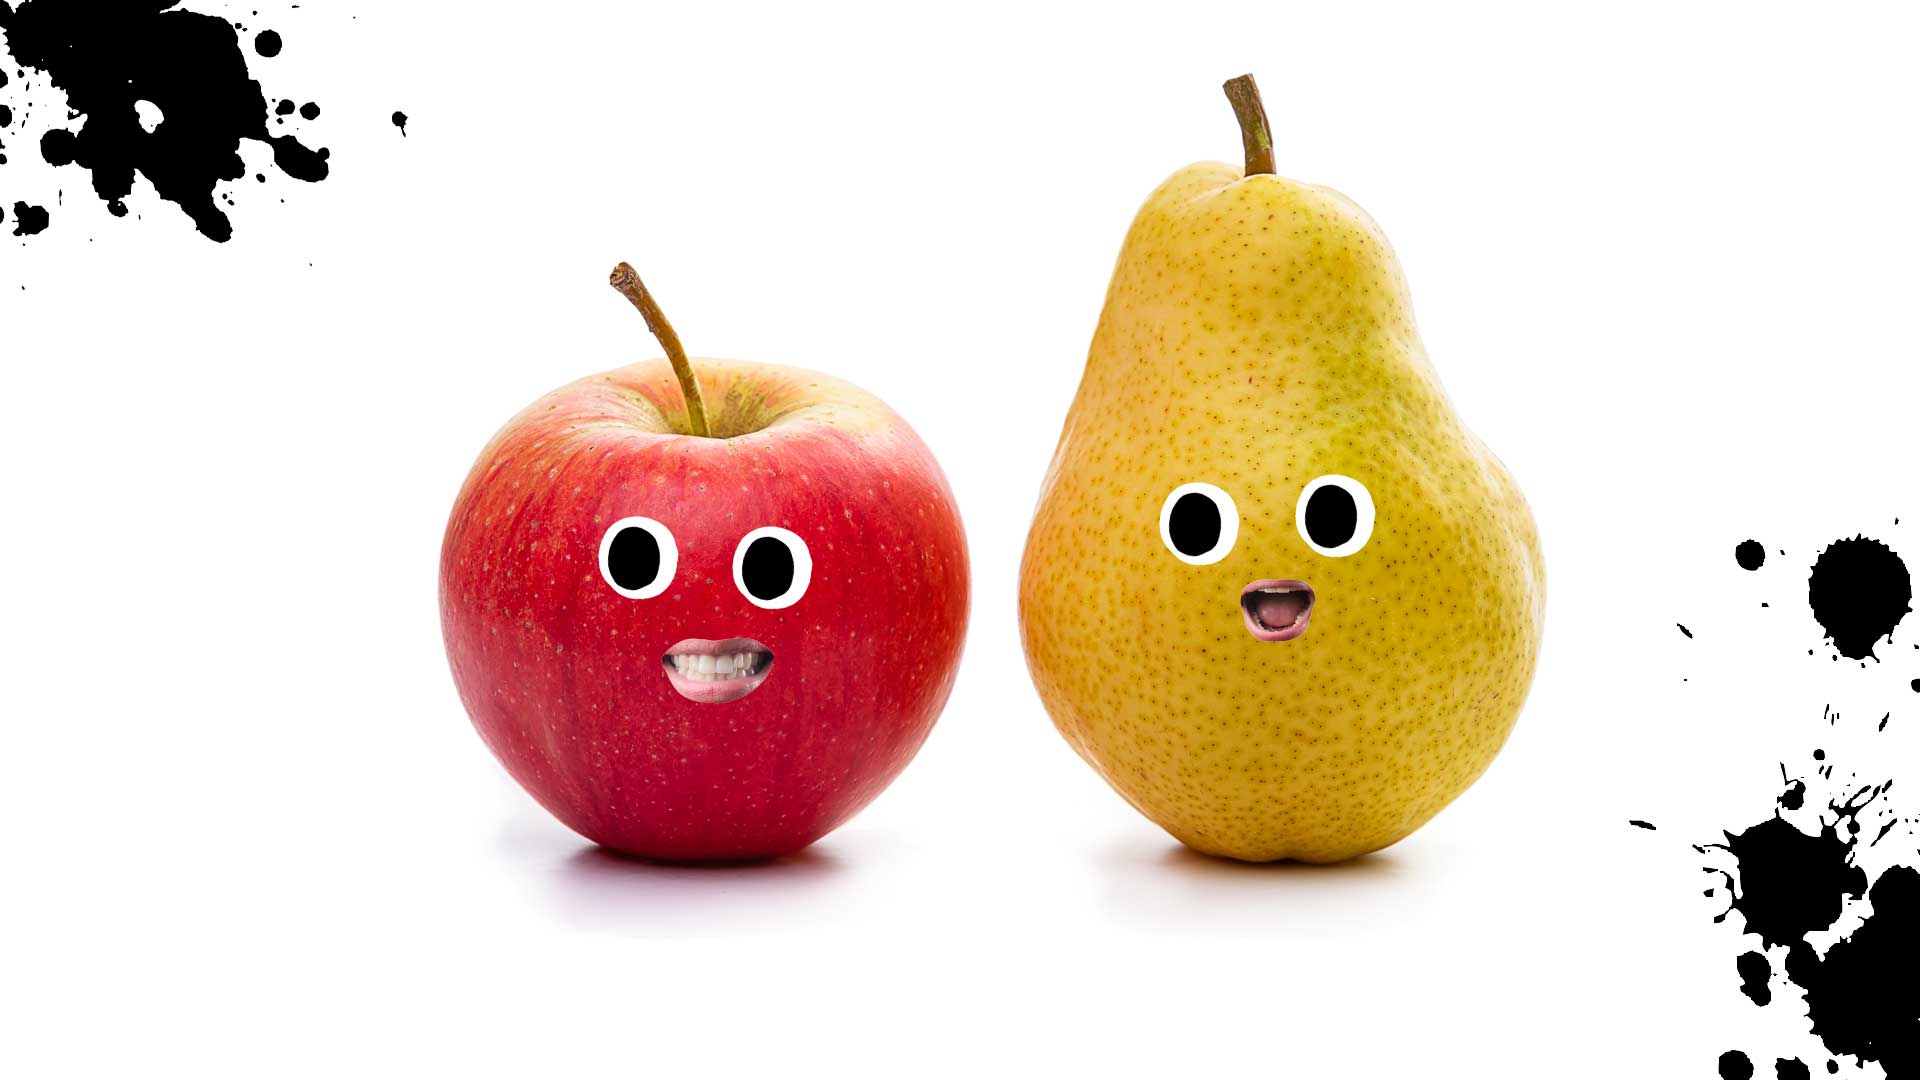 An apple and a pear